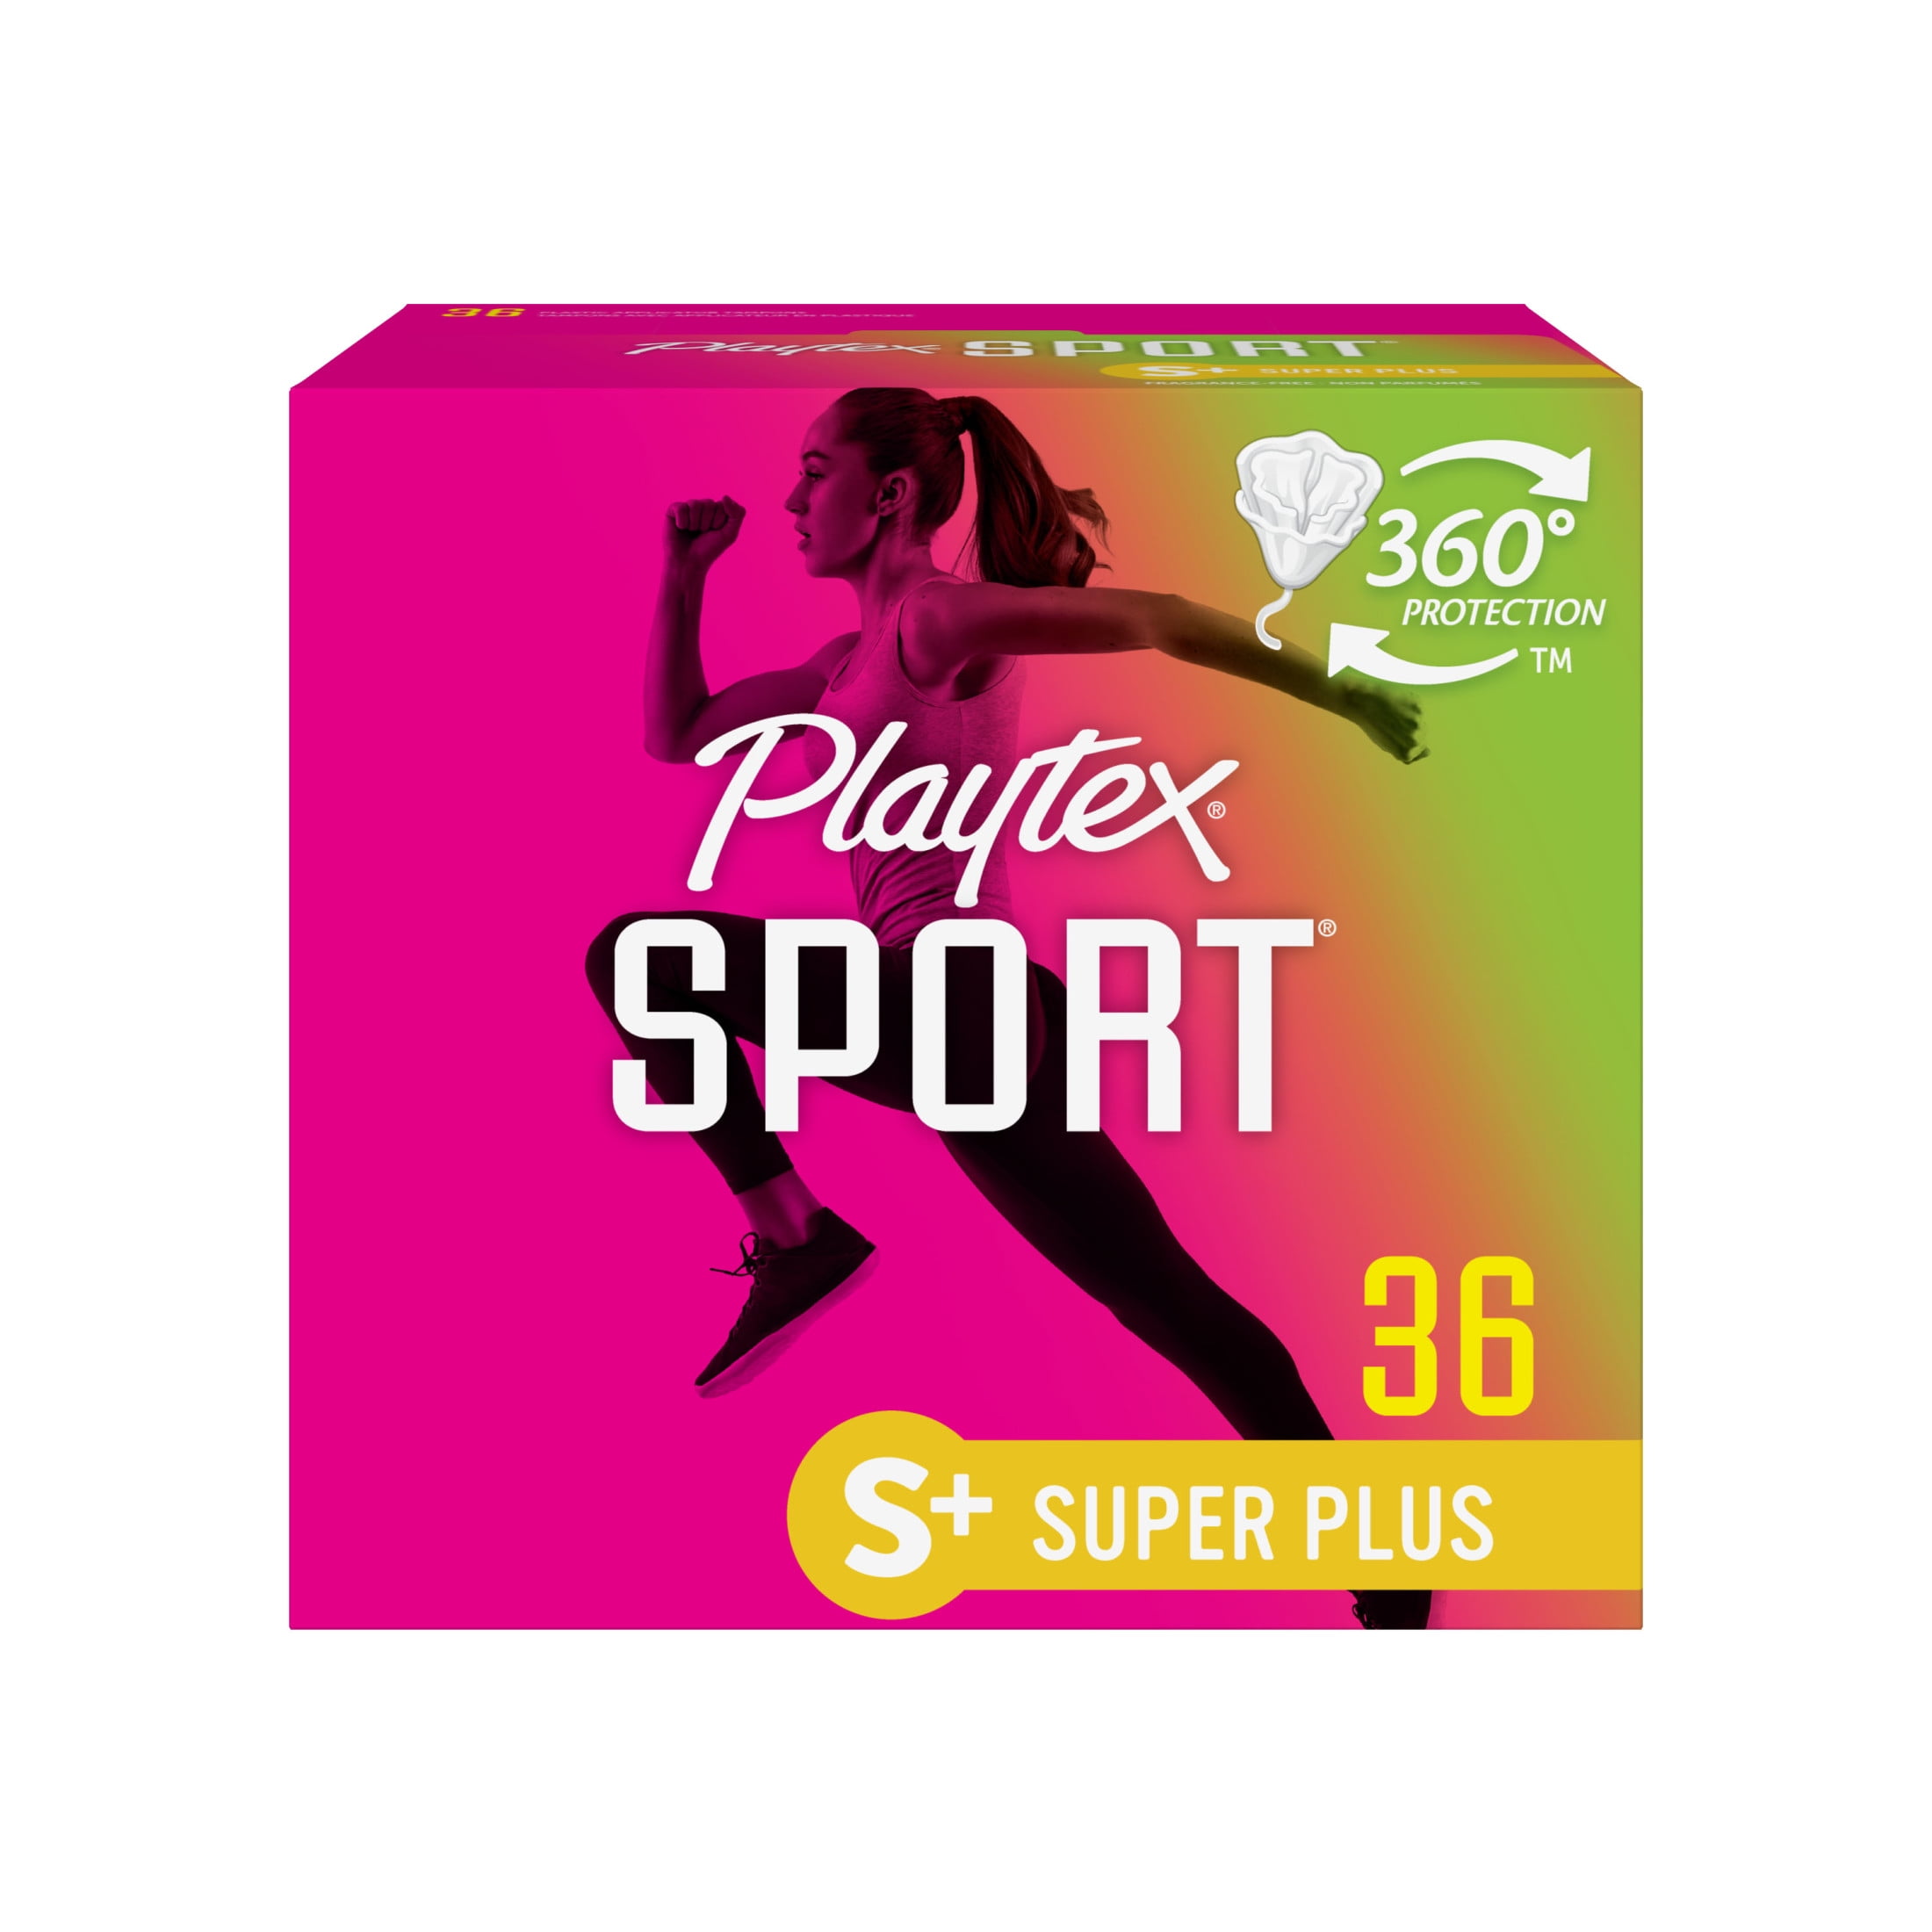 Playtex Sport Super Plus Plastic Applicator Unscented Tampons